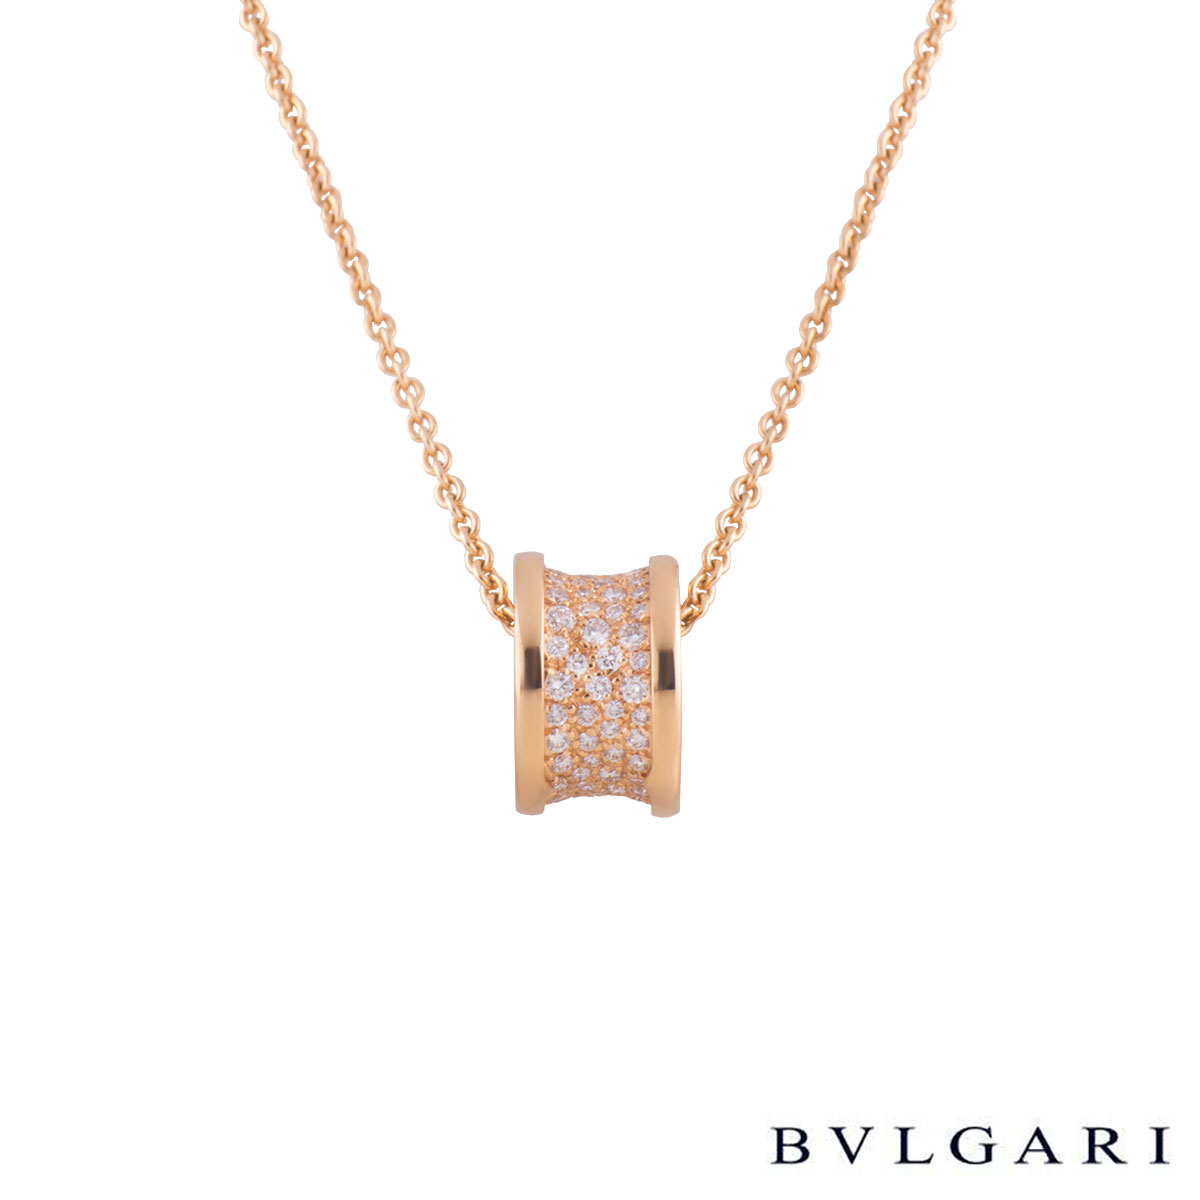 bvlgari rose gold diamond necklace